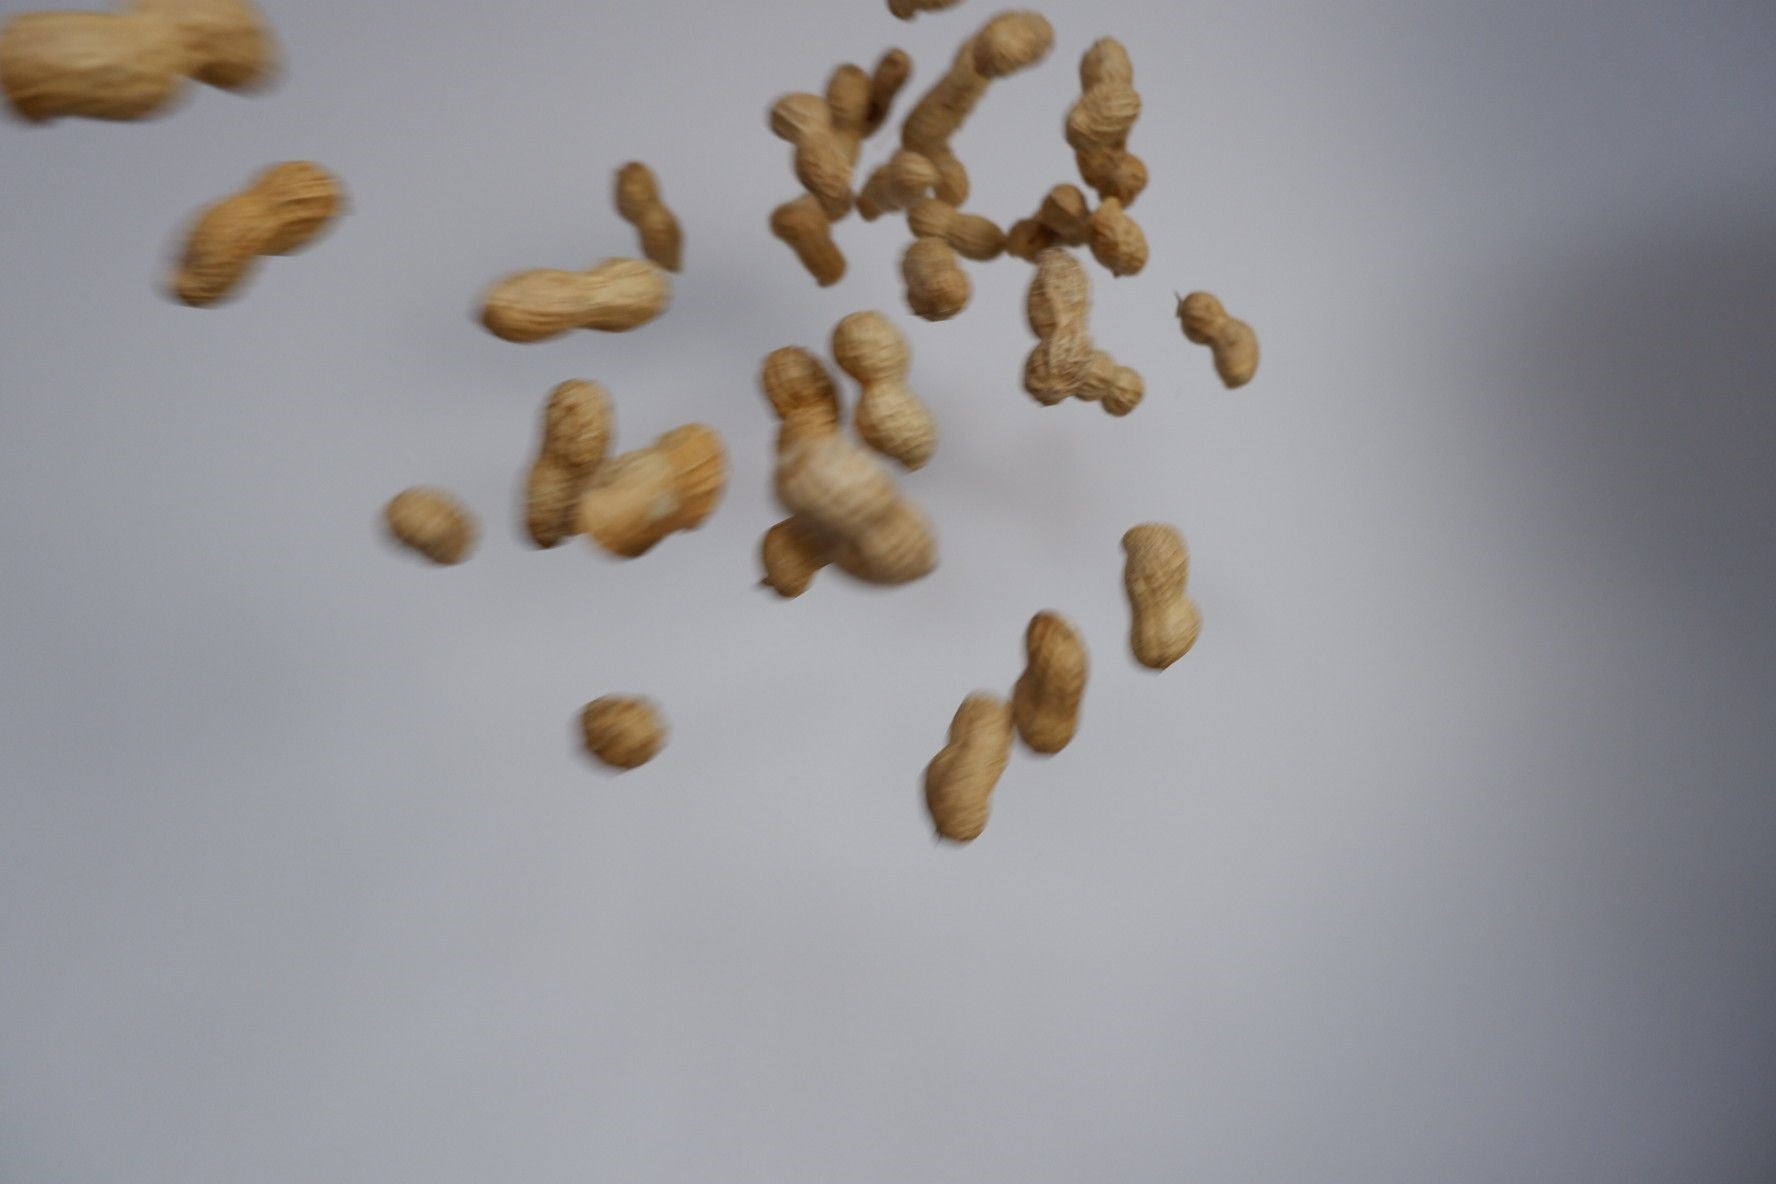 How Peanut Production Benefits Argentina